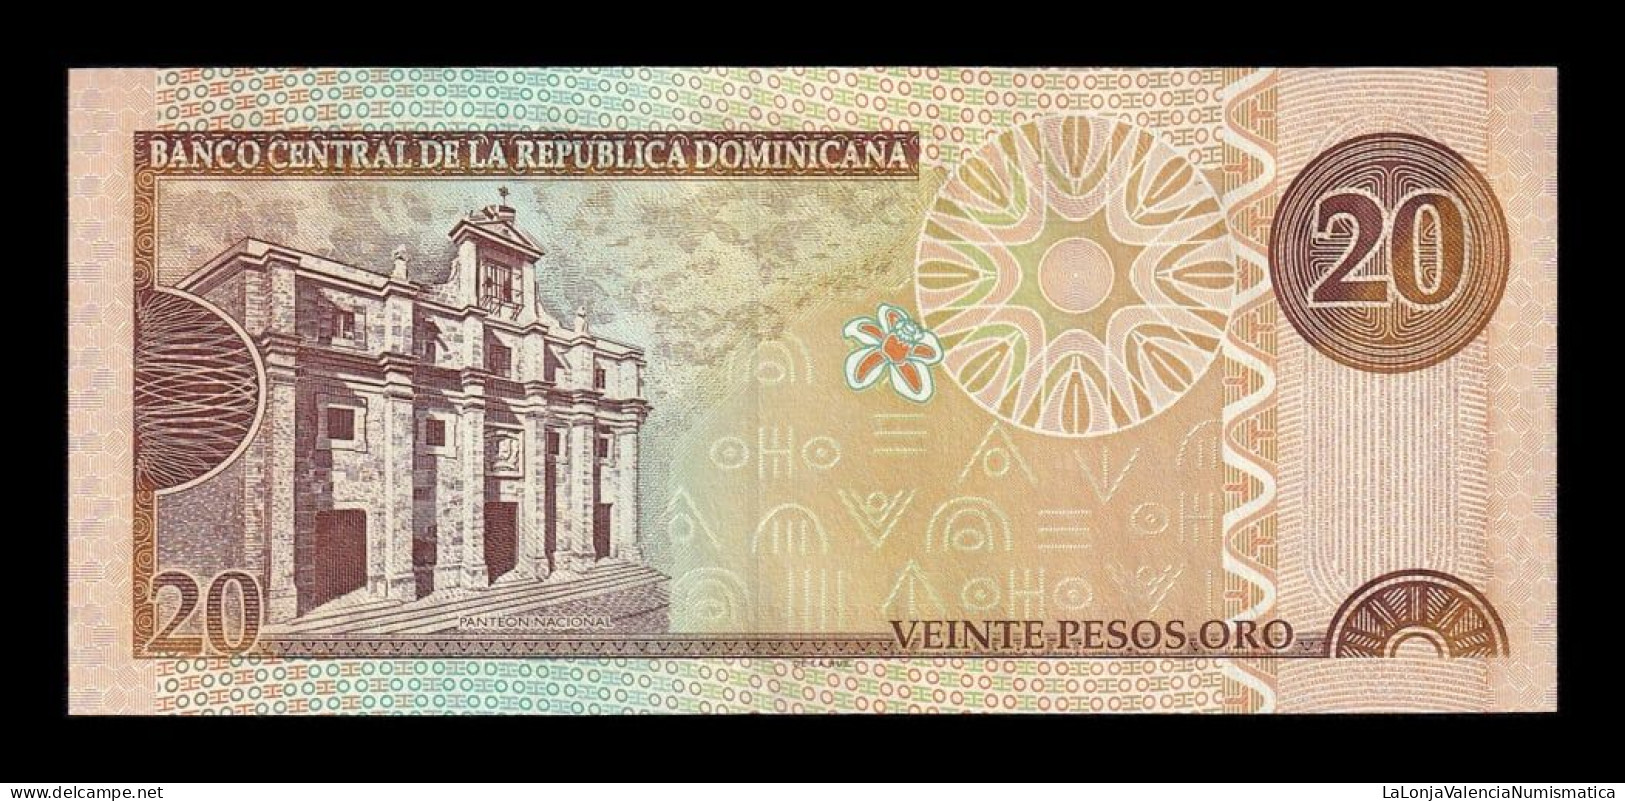 República Dominicana 20 Pesos Oro 2003 Pick 169c Sc Unc - Repubblica Dominicana